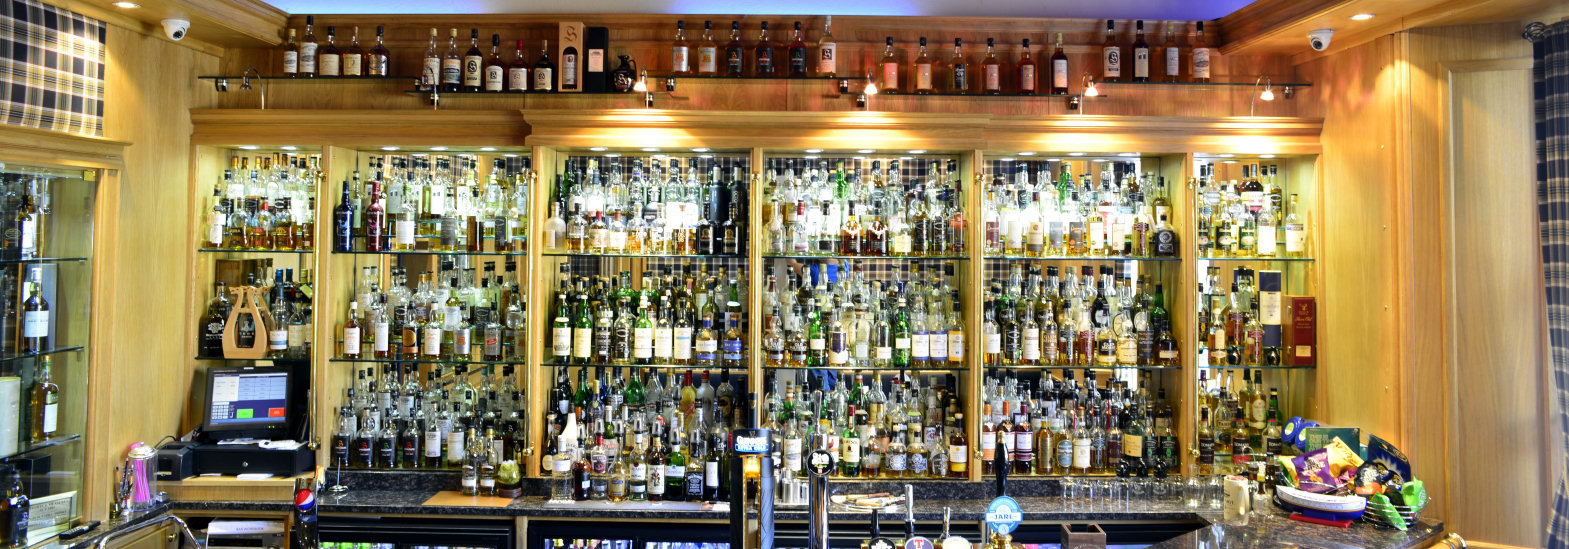 Ardsheil Hotel Restaurant & Whisky Bar Campbeltown